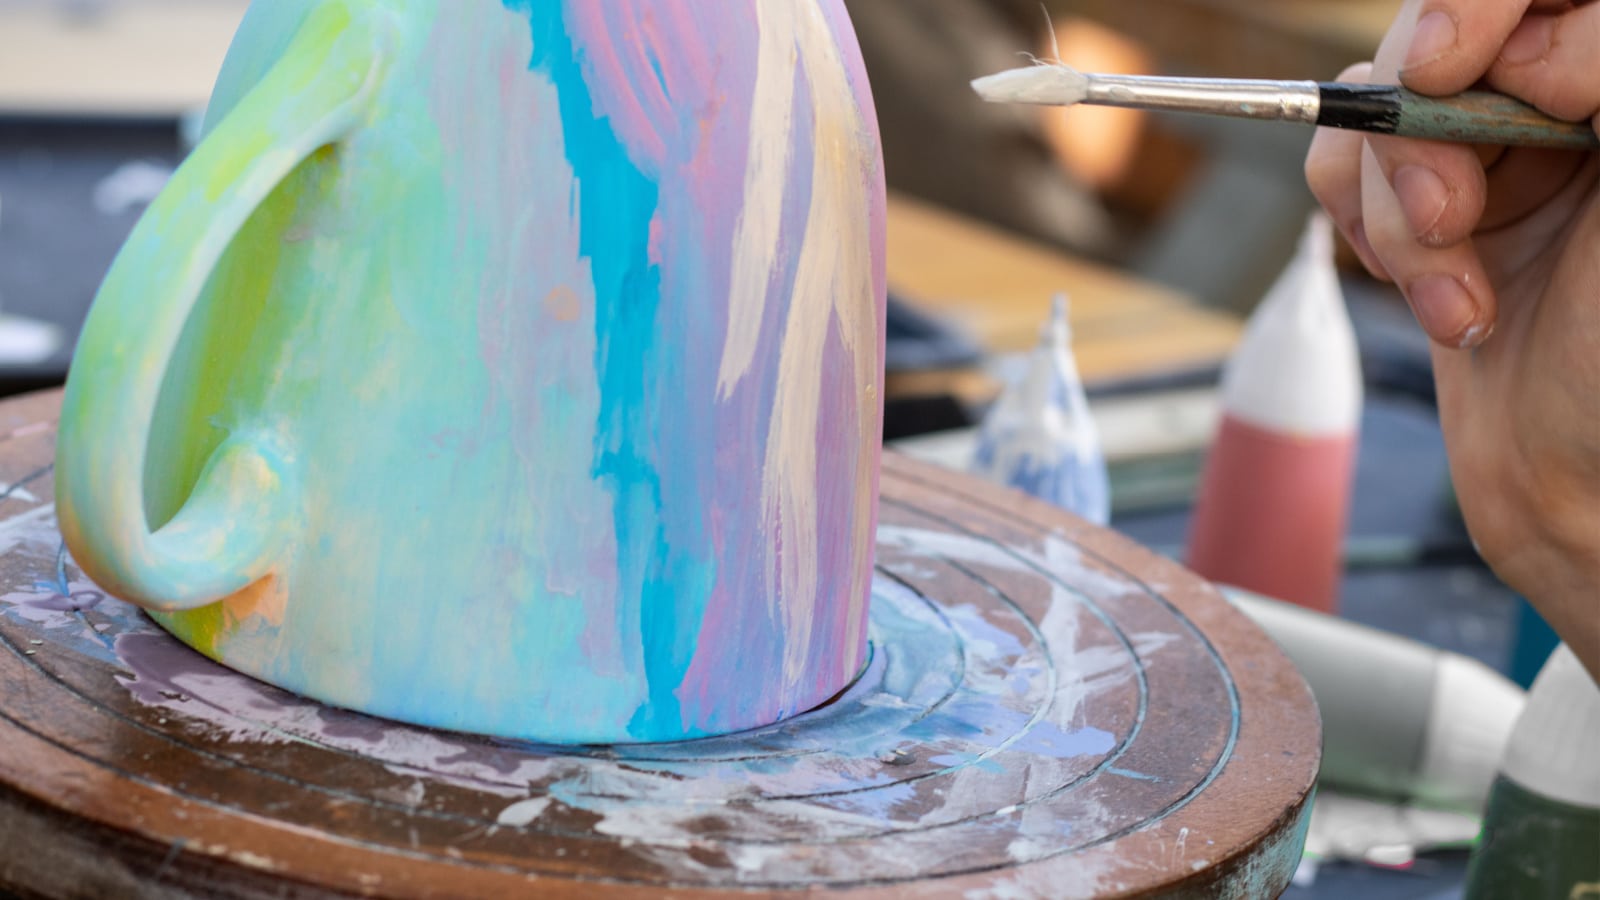 Hand painting a ceramic mug